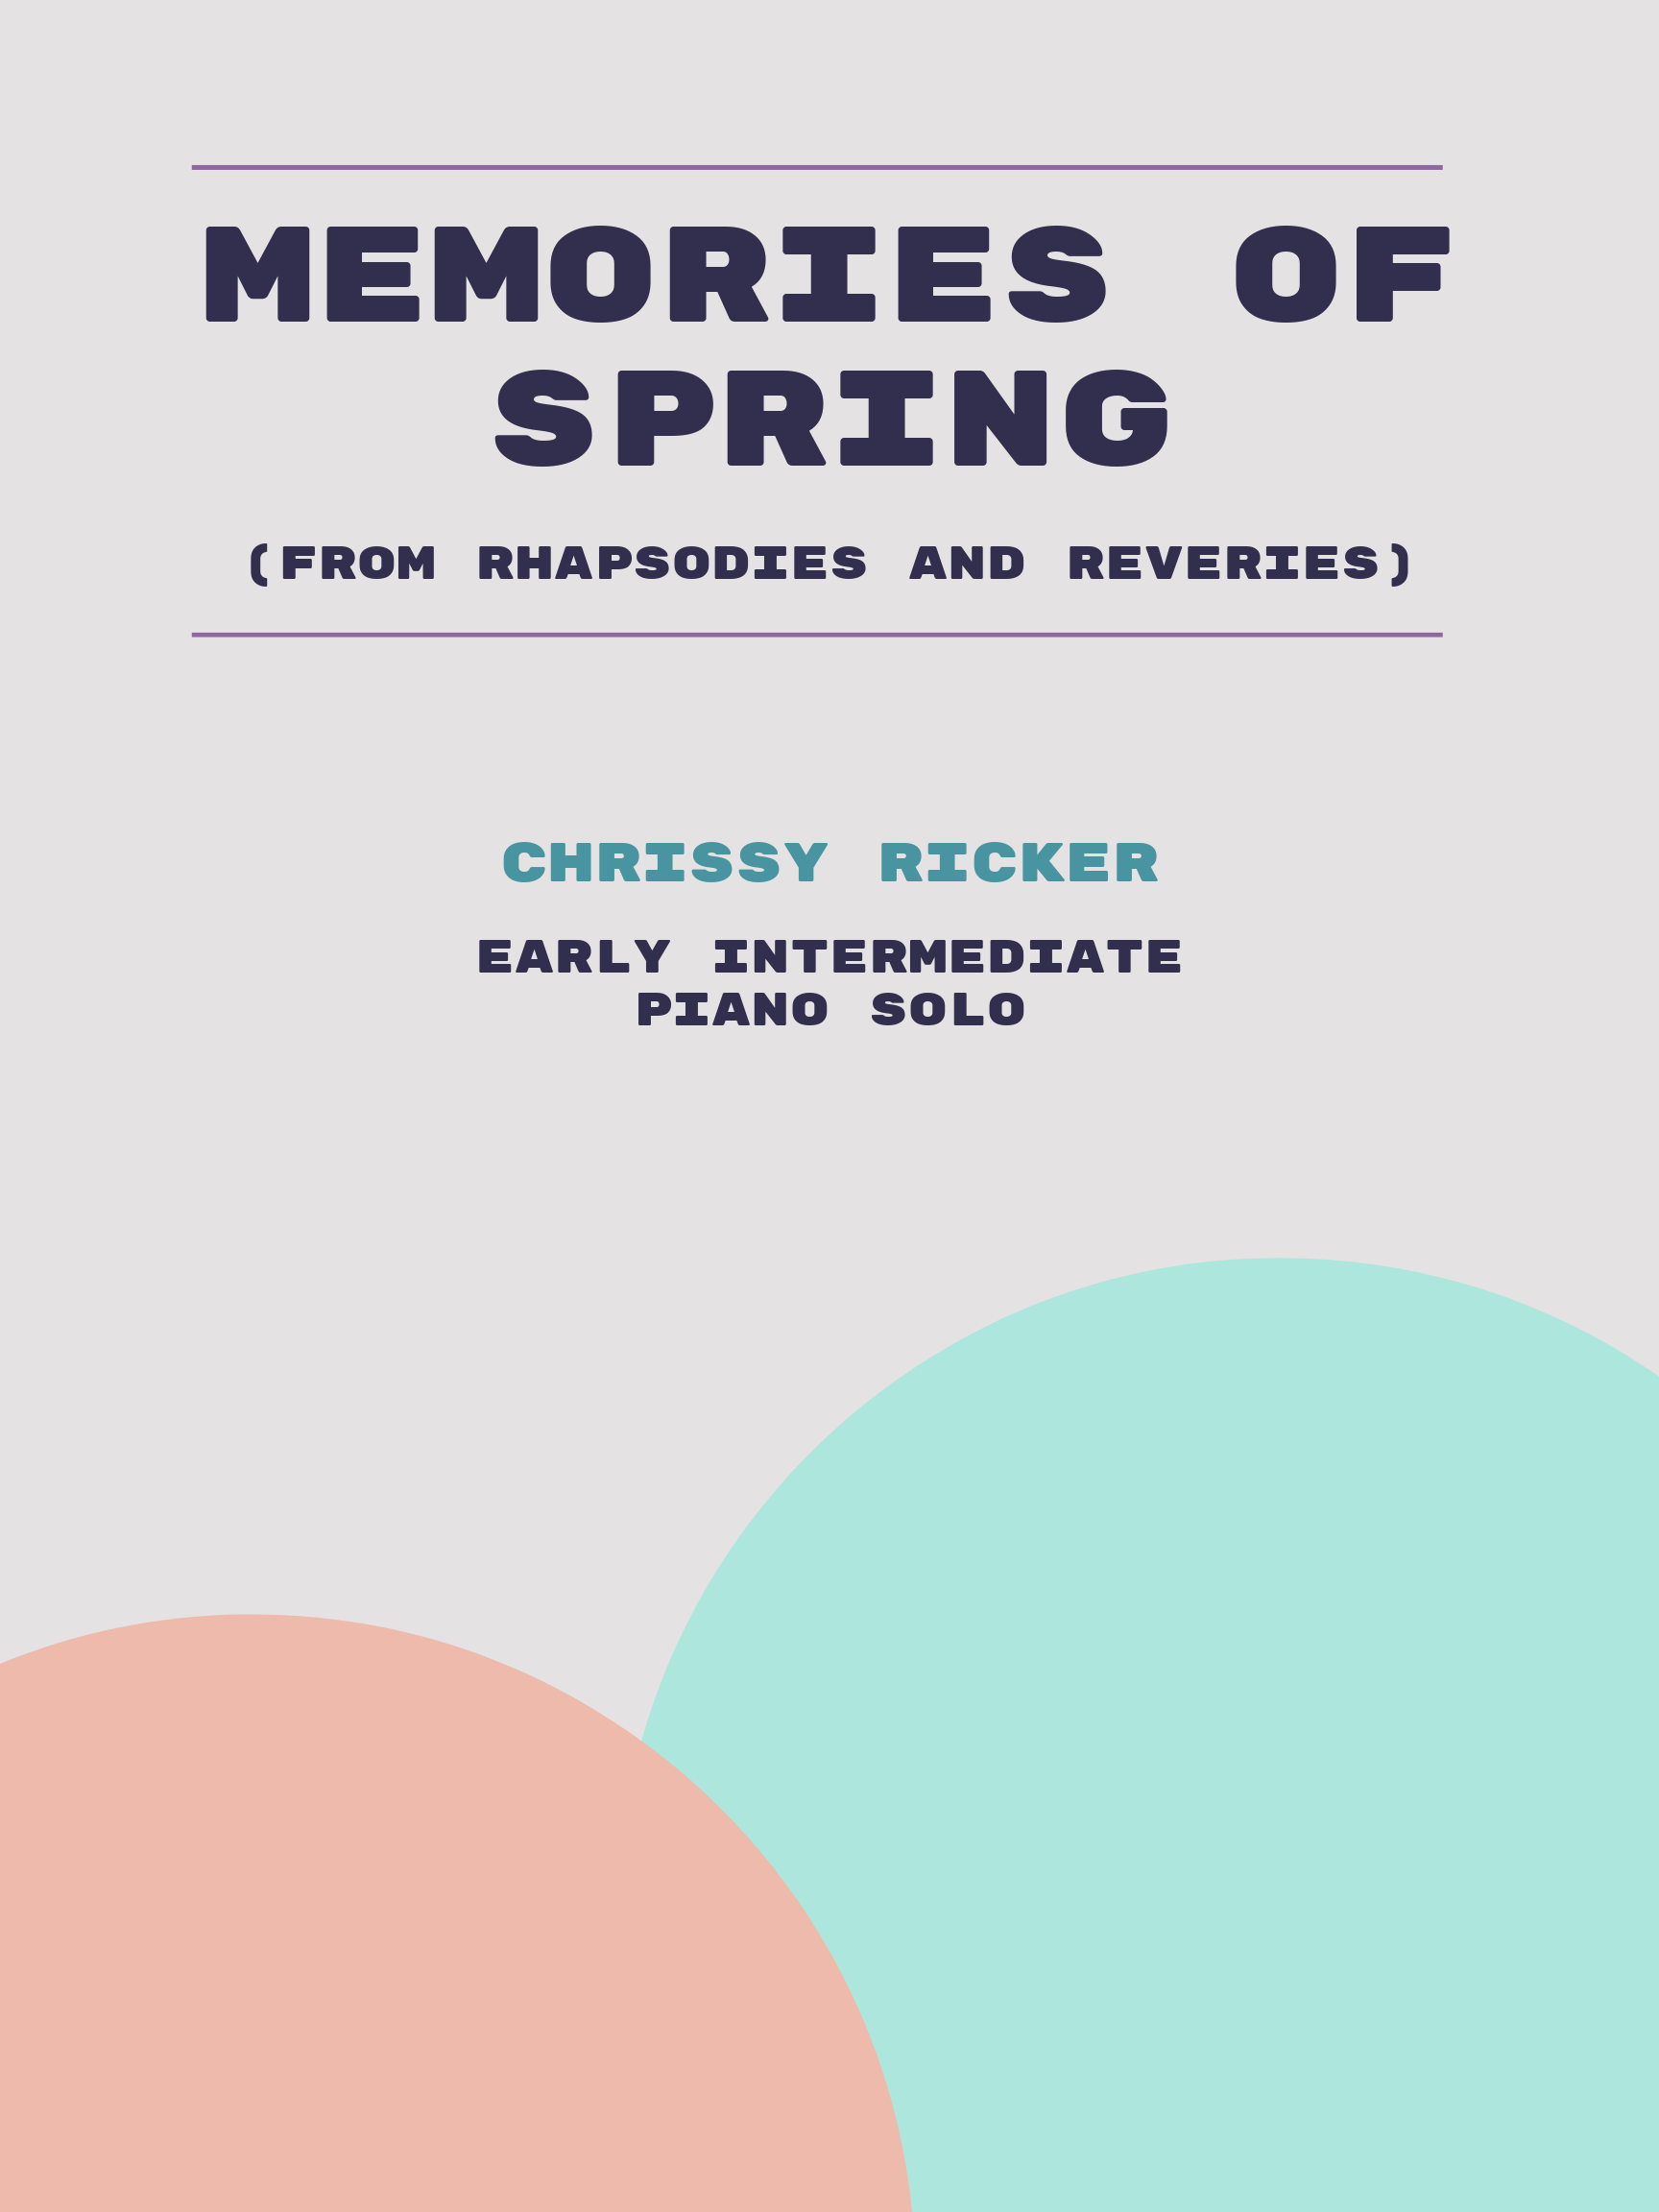 Memories of Spring by Chrissy Ricker